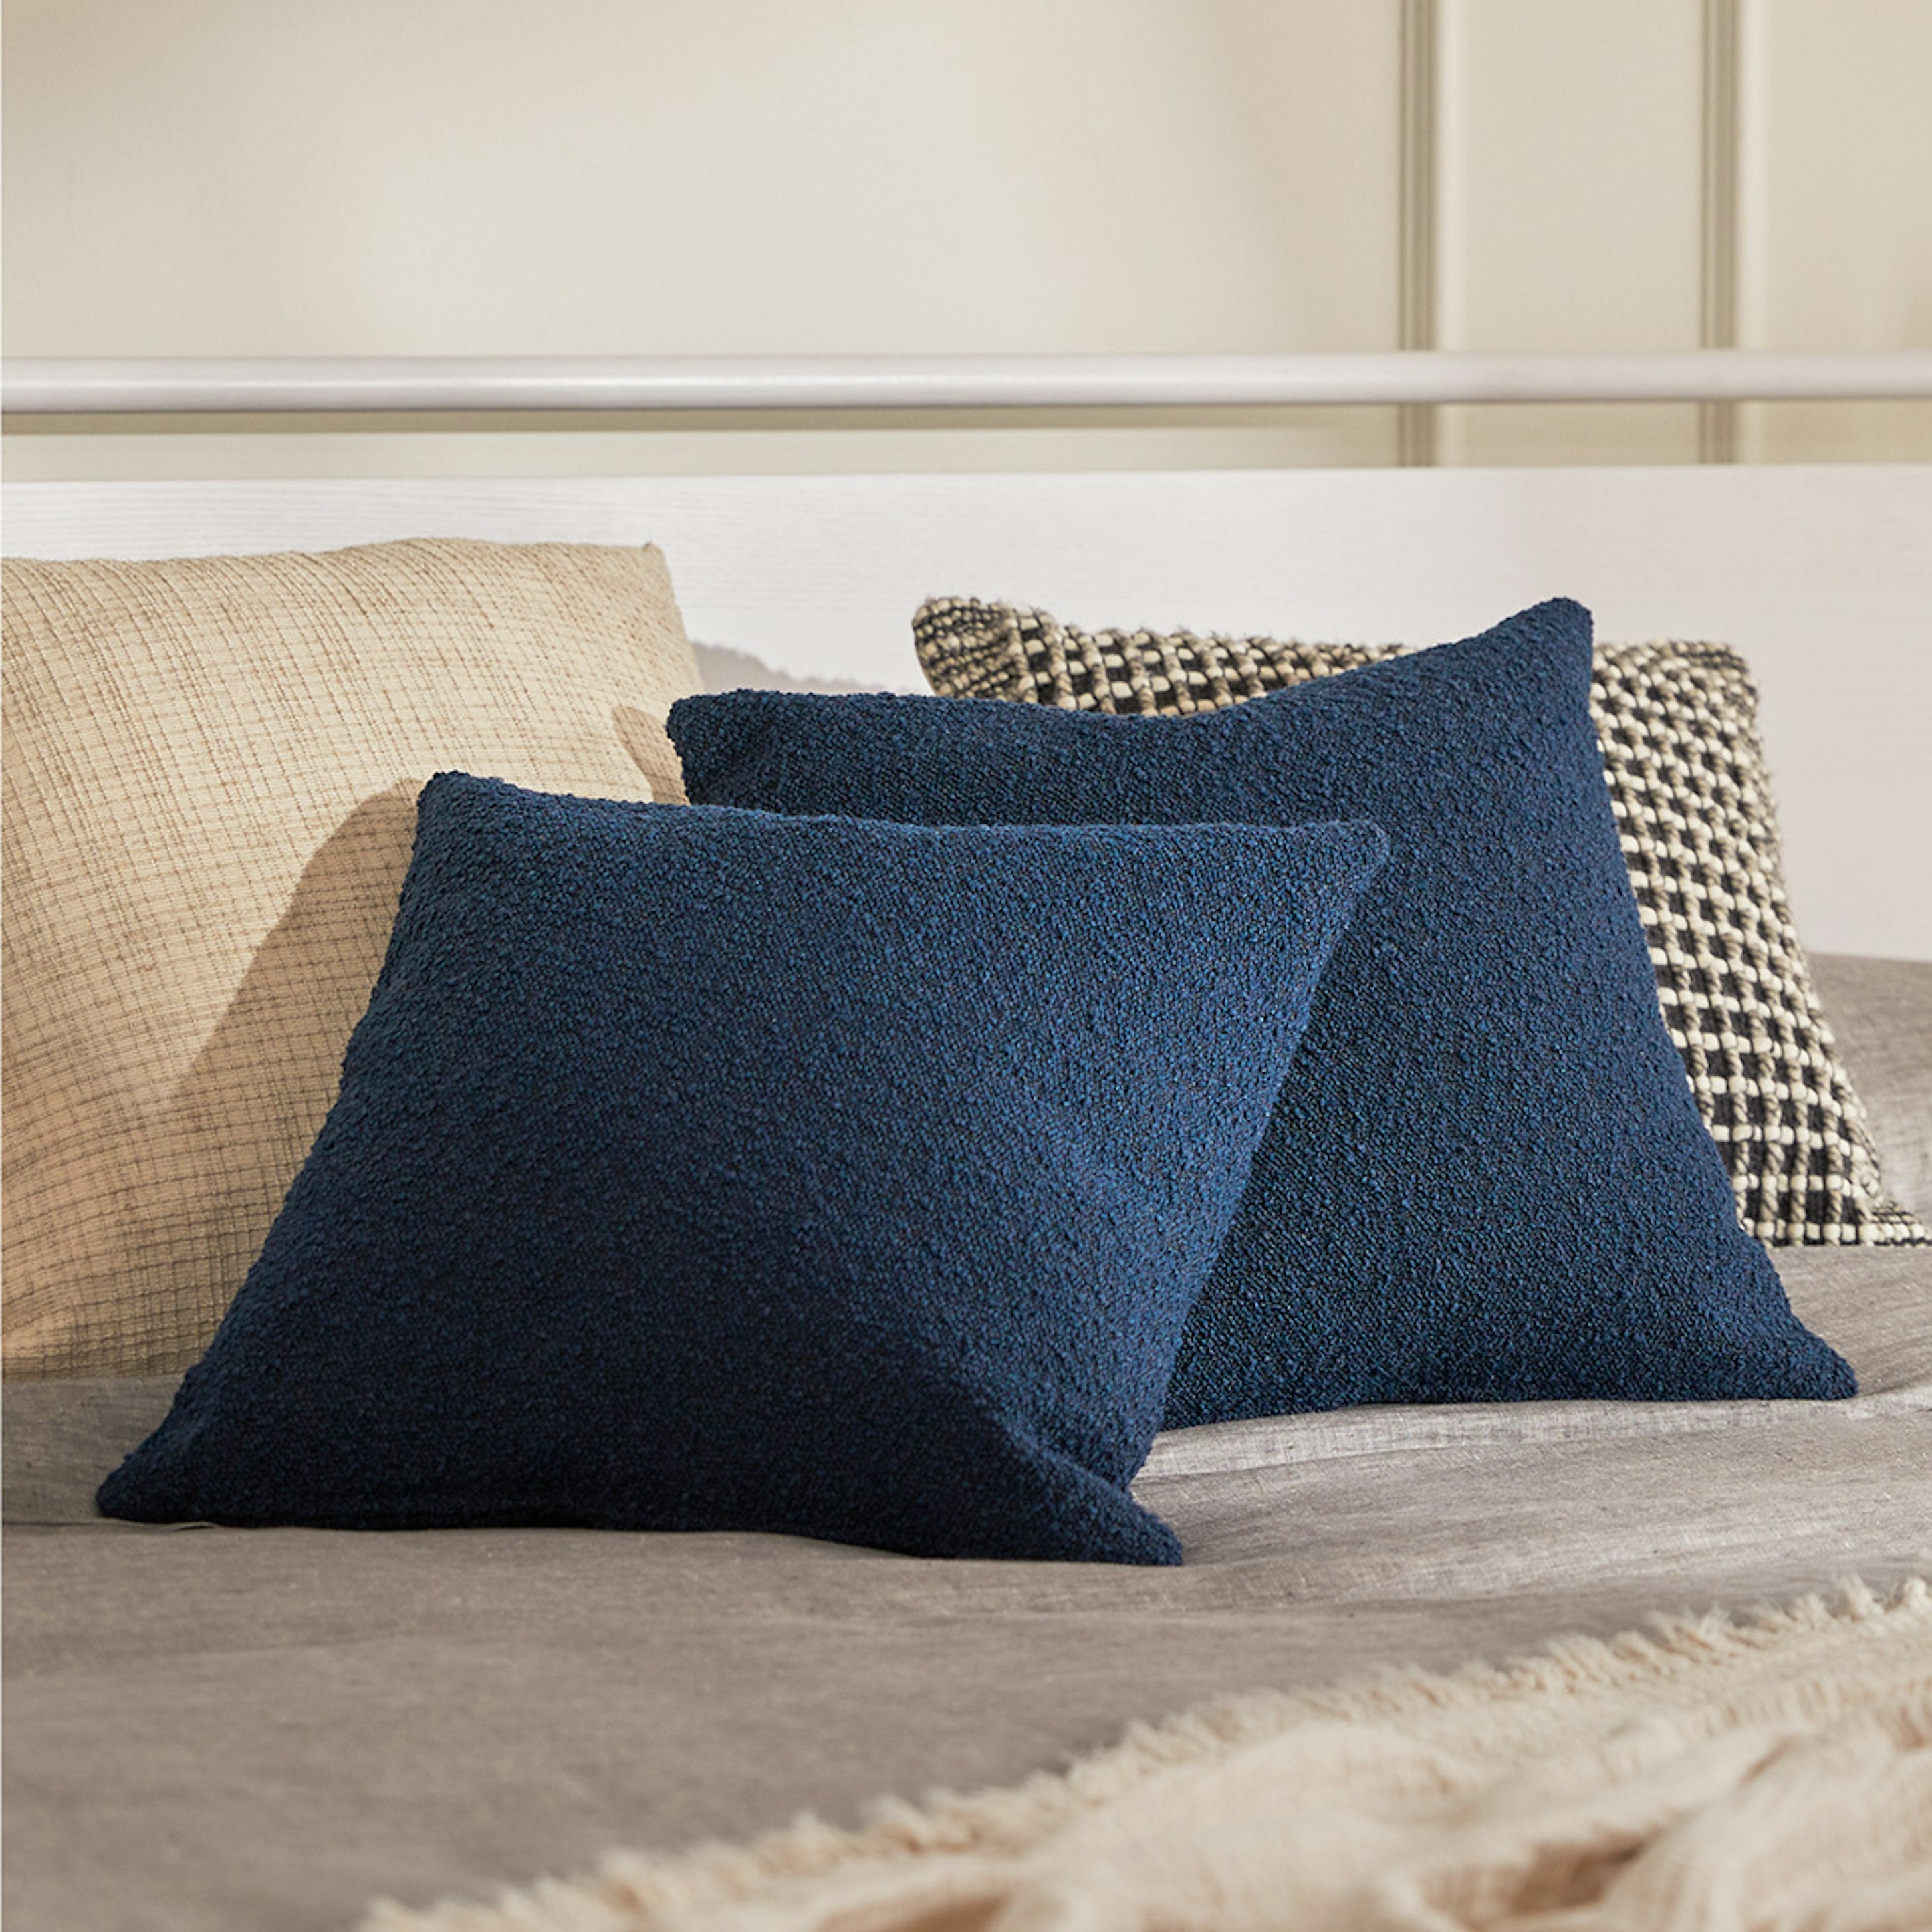 Gabriola Fur Fabric 20x20 inches Cushion + Covers (Pack of 2) In Danim Blue Colour